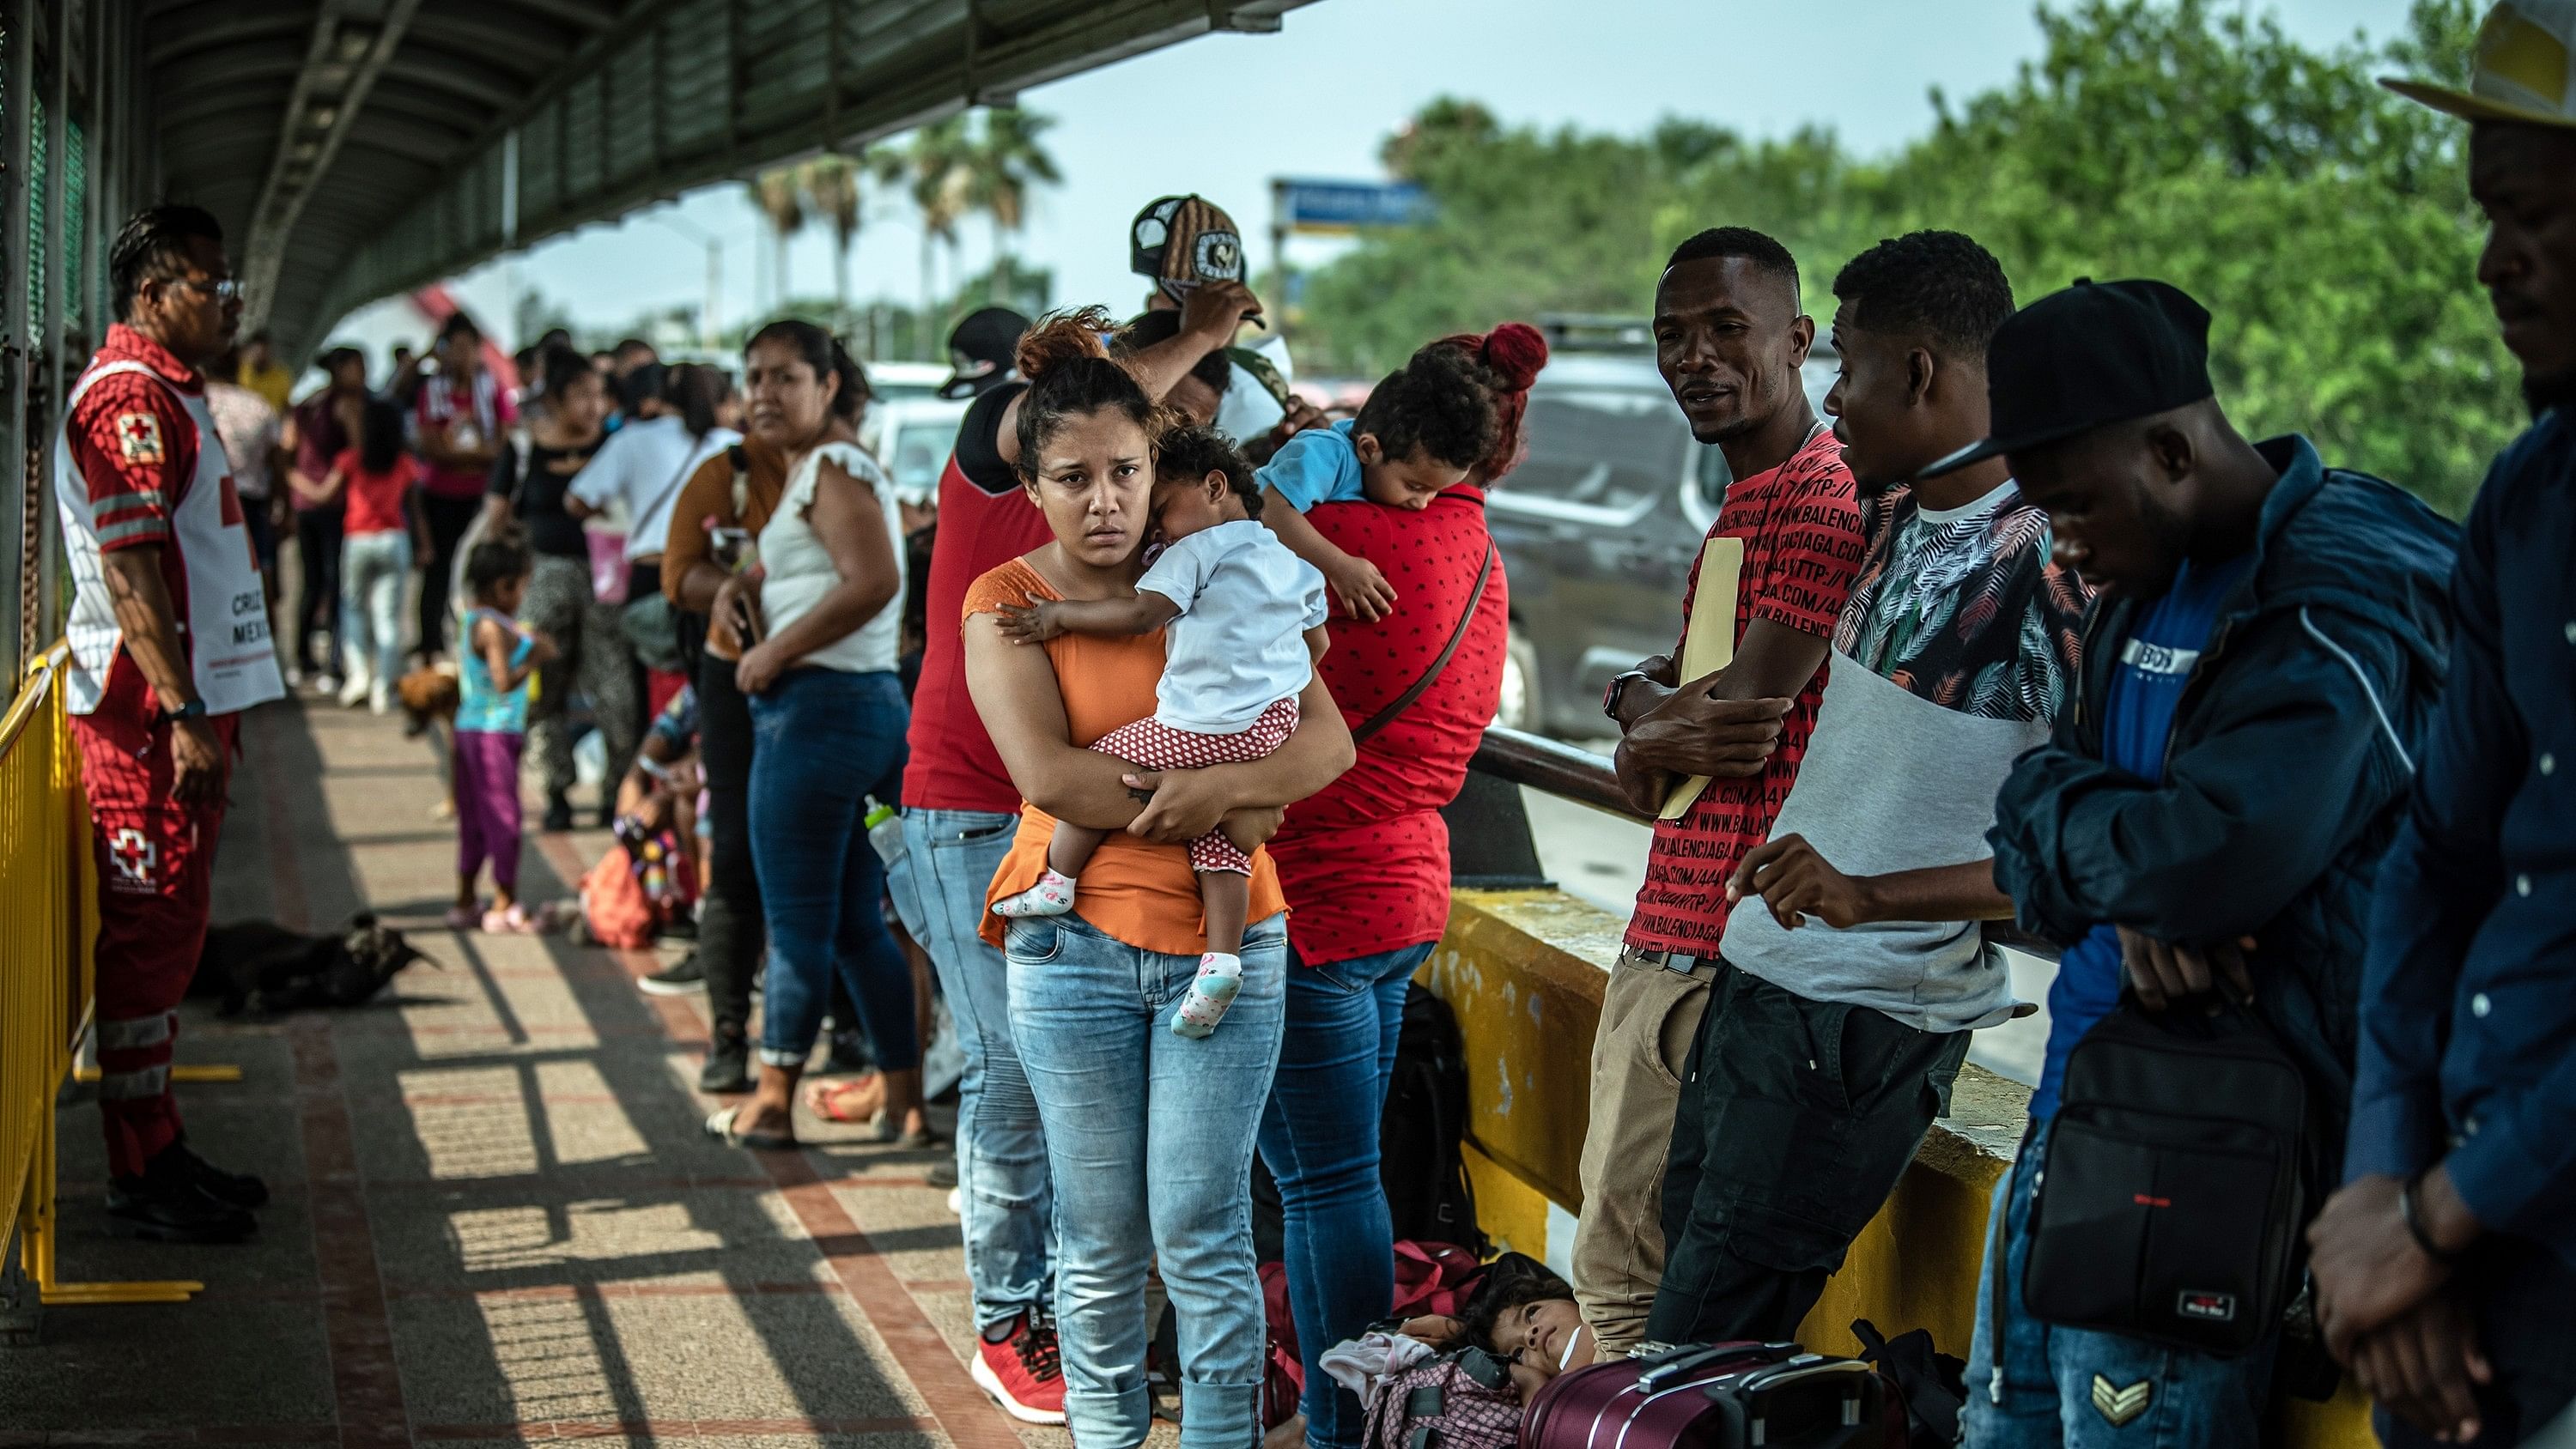 <div class="paragraphs"><p>Representative image of Mexican refugees at the US border.</p></div>